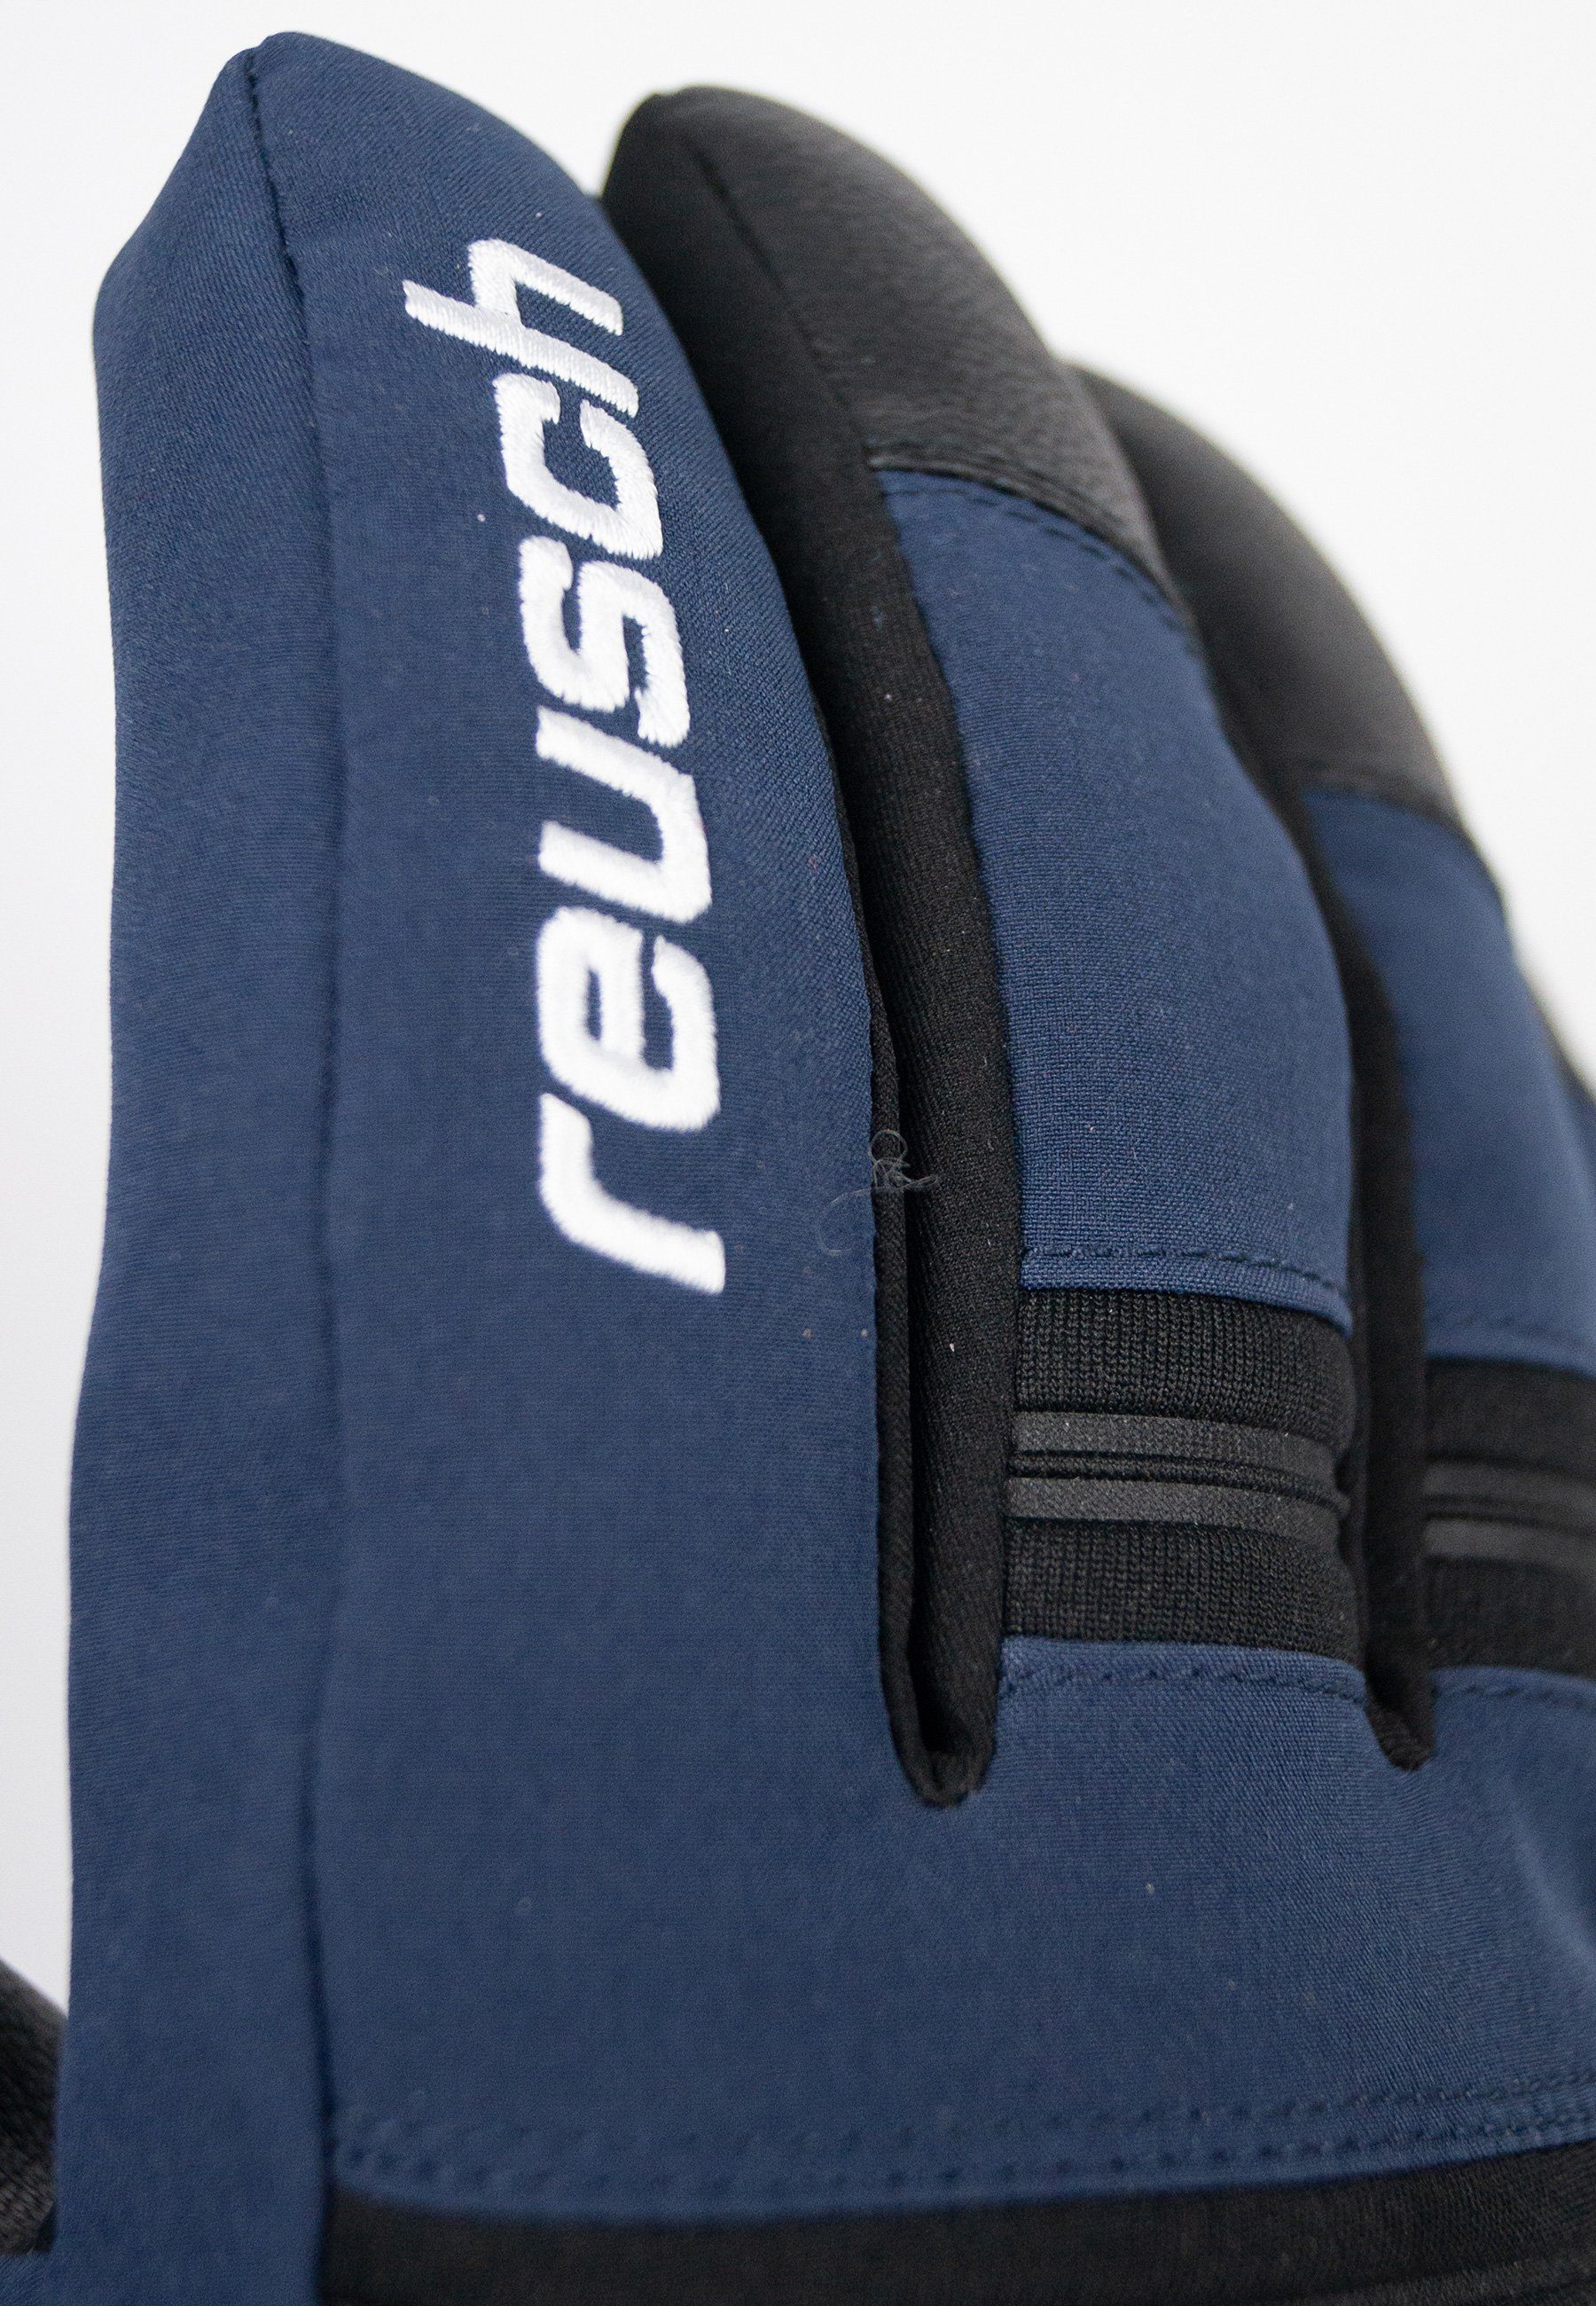 Reusch Skihandschuhe Kondor R-TEX® XT wasserdichtem blau-schwarz atmungsaktivem und Design in